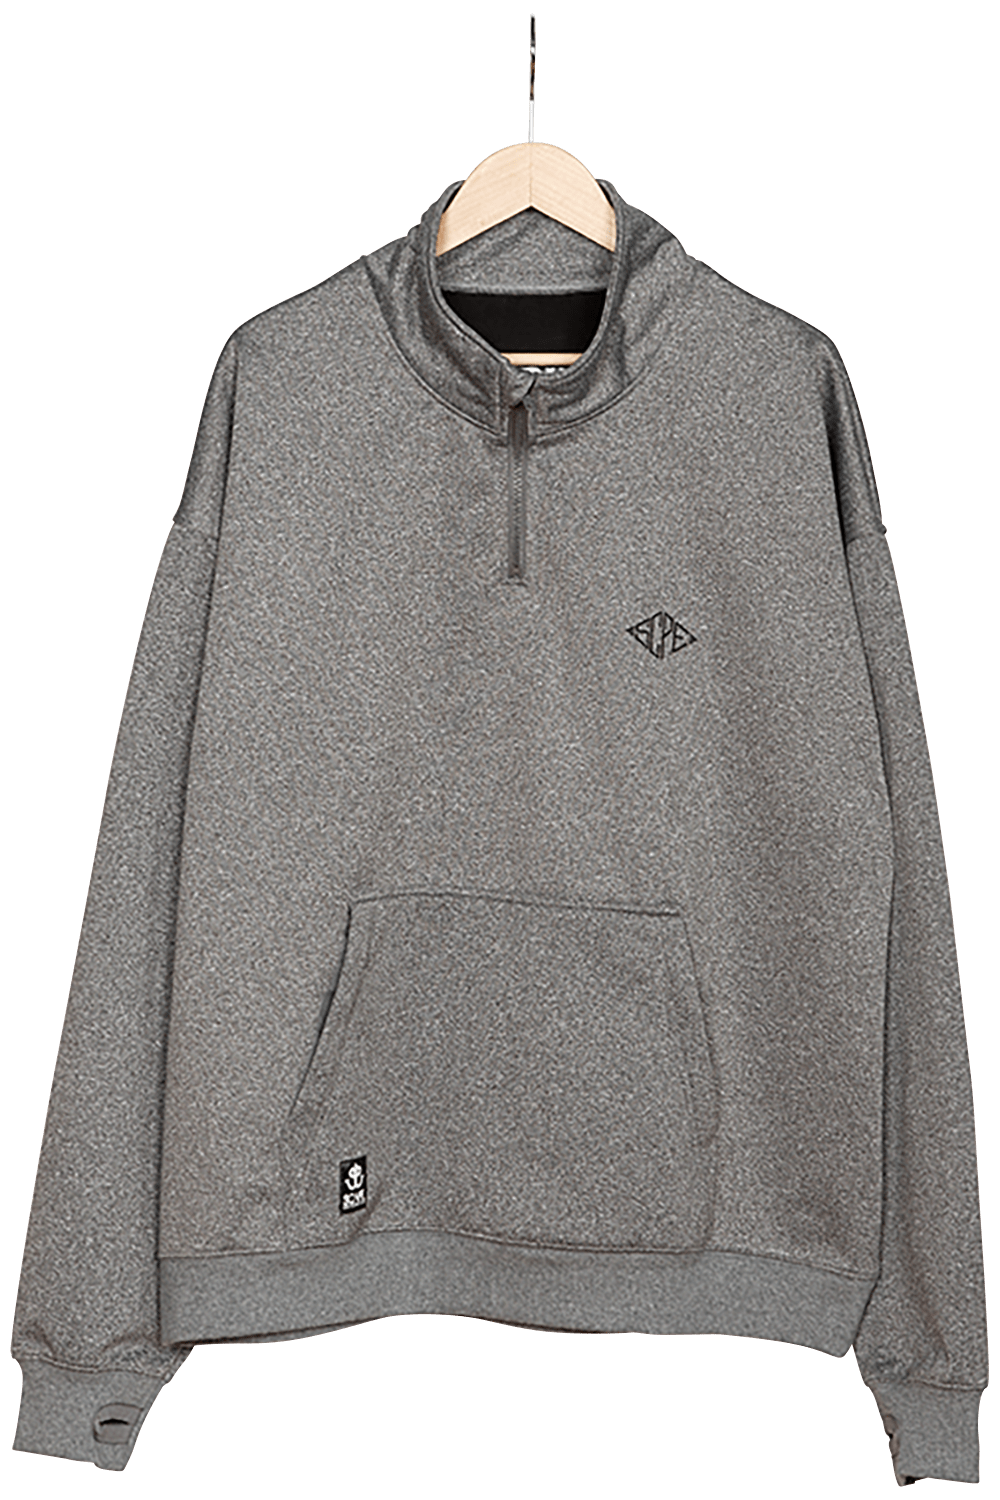 BONDING Half zip | Scape Outerwear